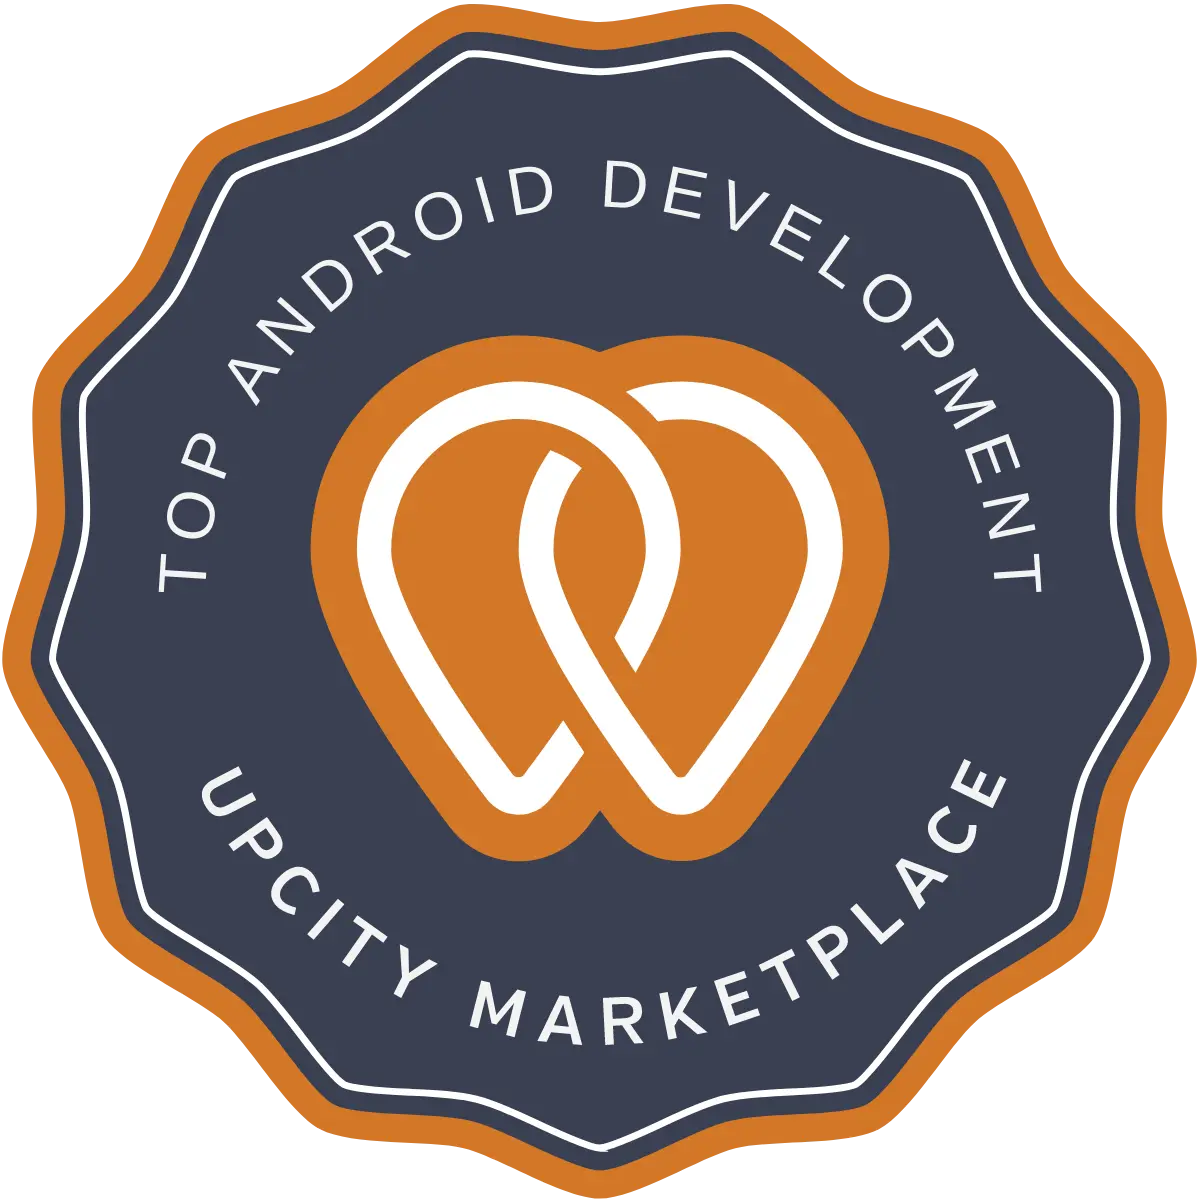 Upcity Android Developer